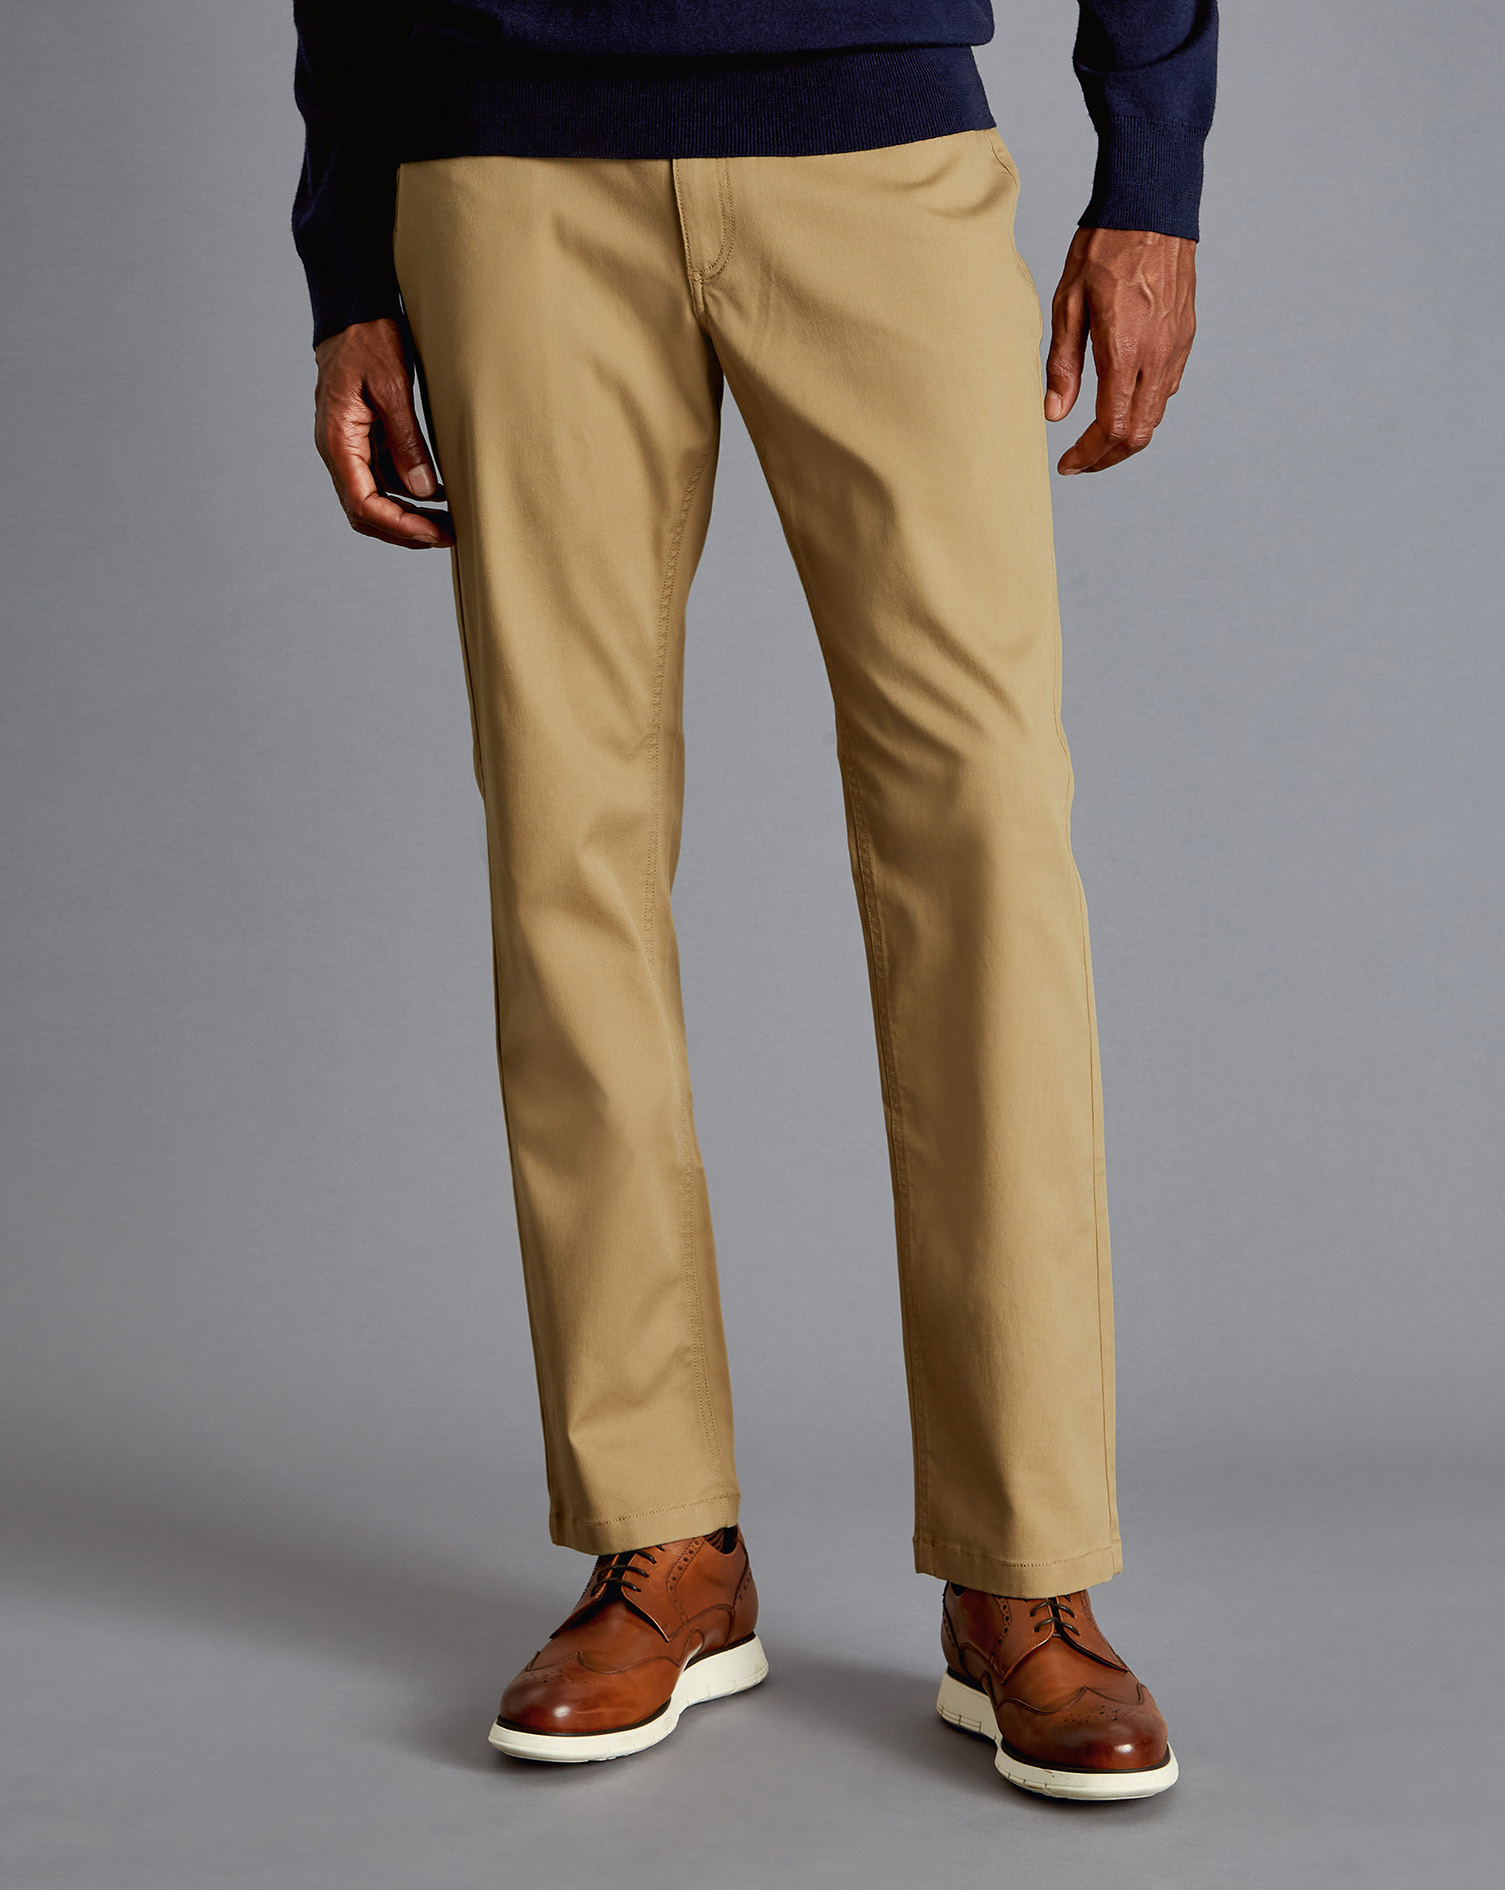 Loose Fit 5-pocket trousers - Black - Men | H&M IN